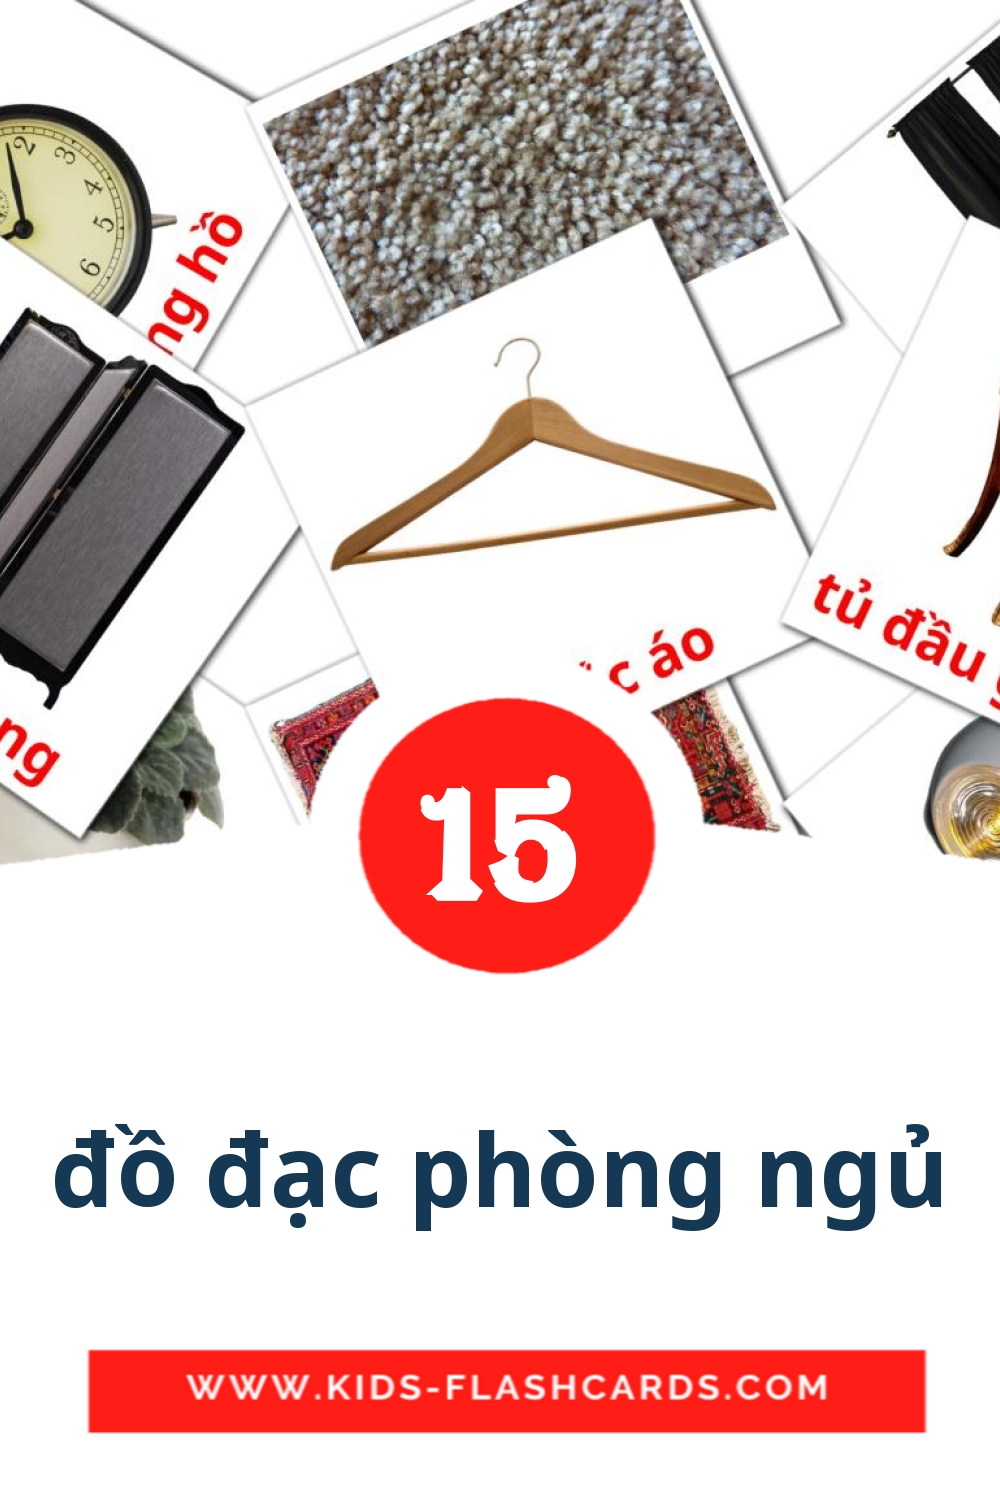 15 carte illustrate di đồ đạc phòng ngủ per la scuola materna in vietnamita